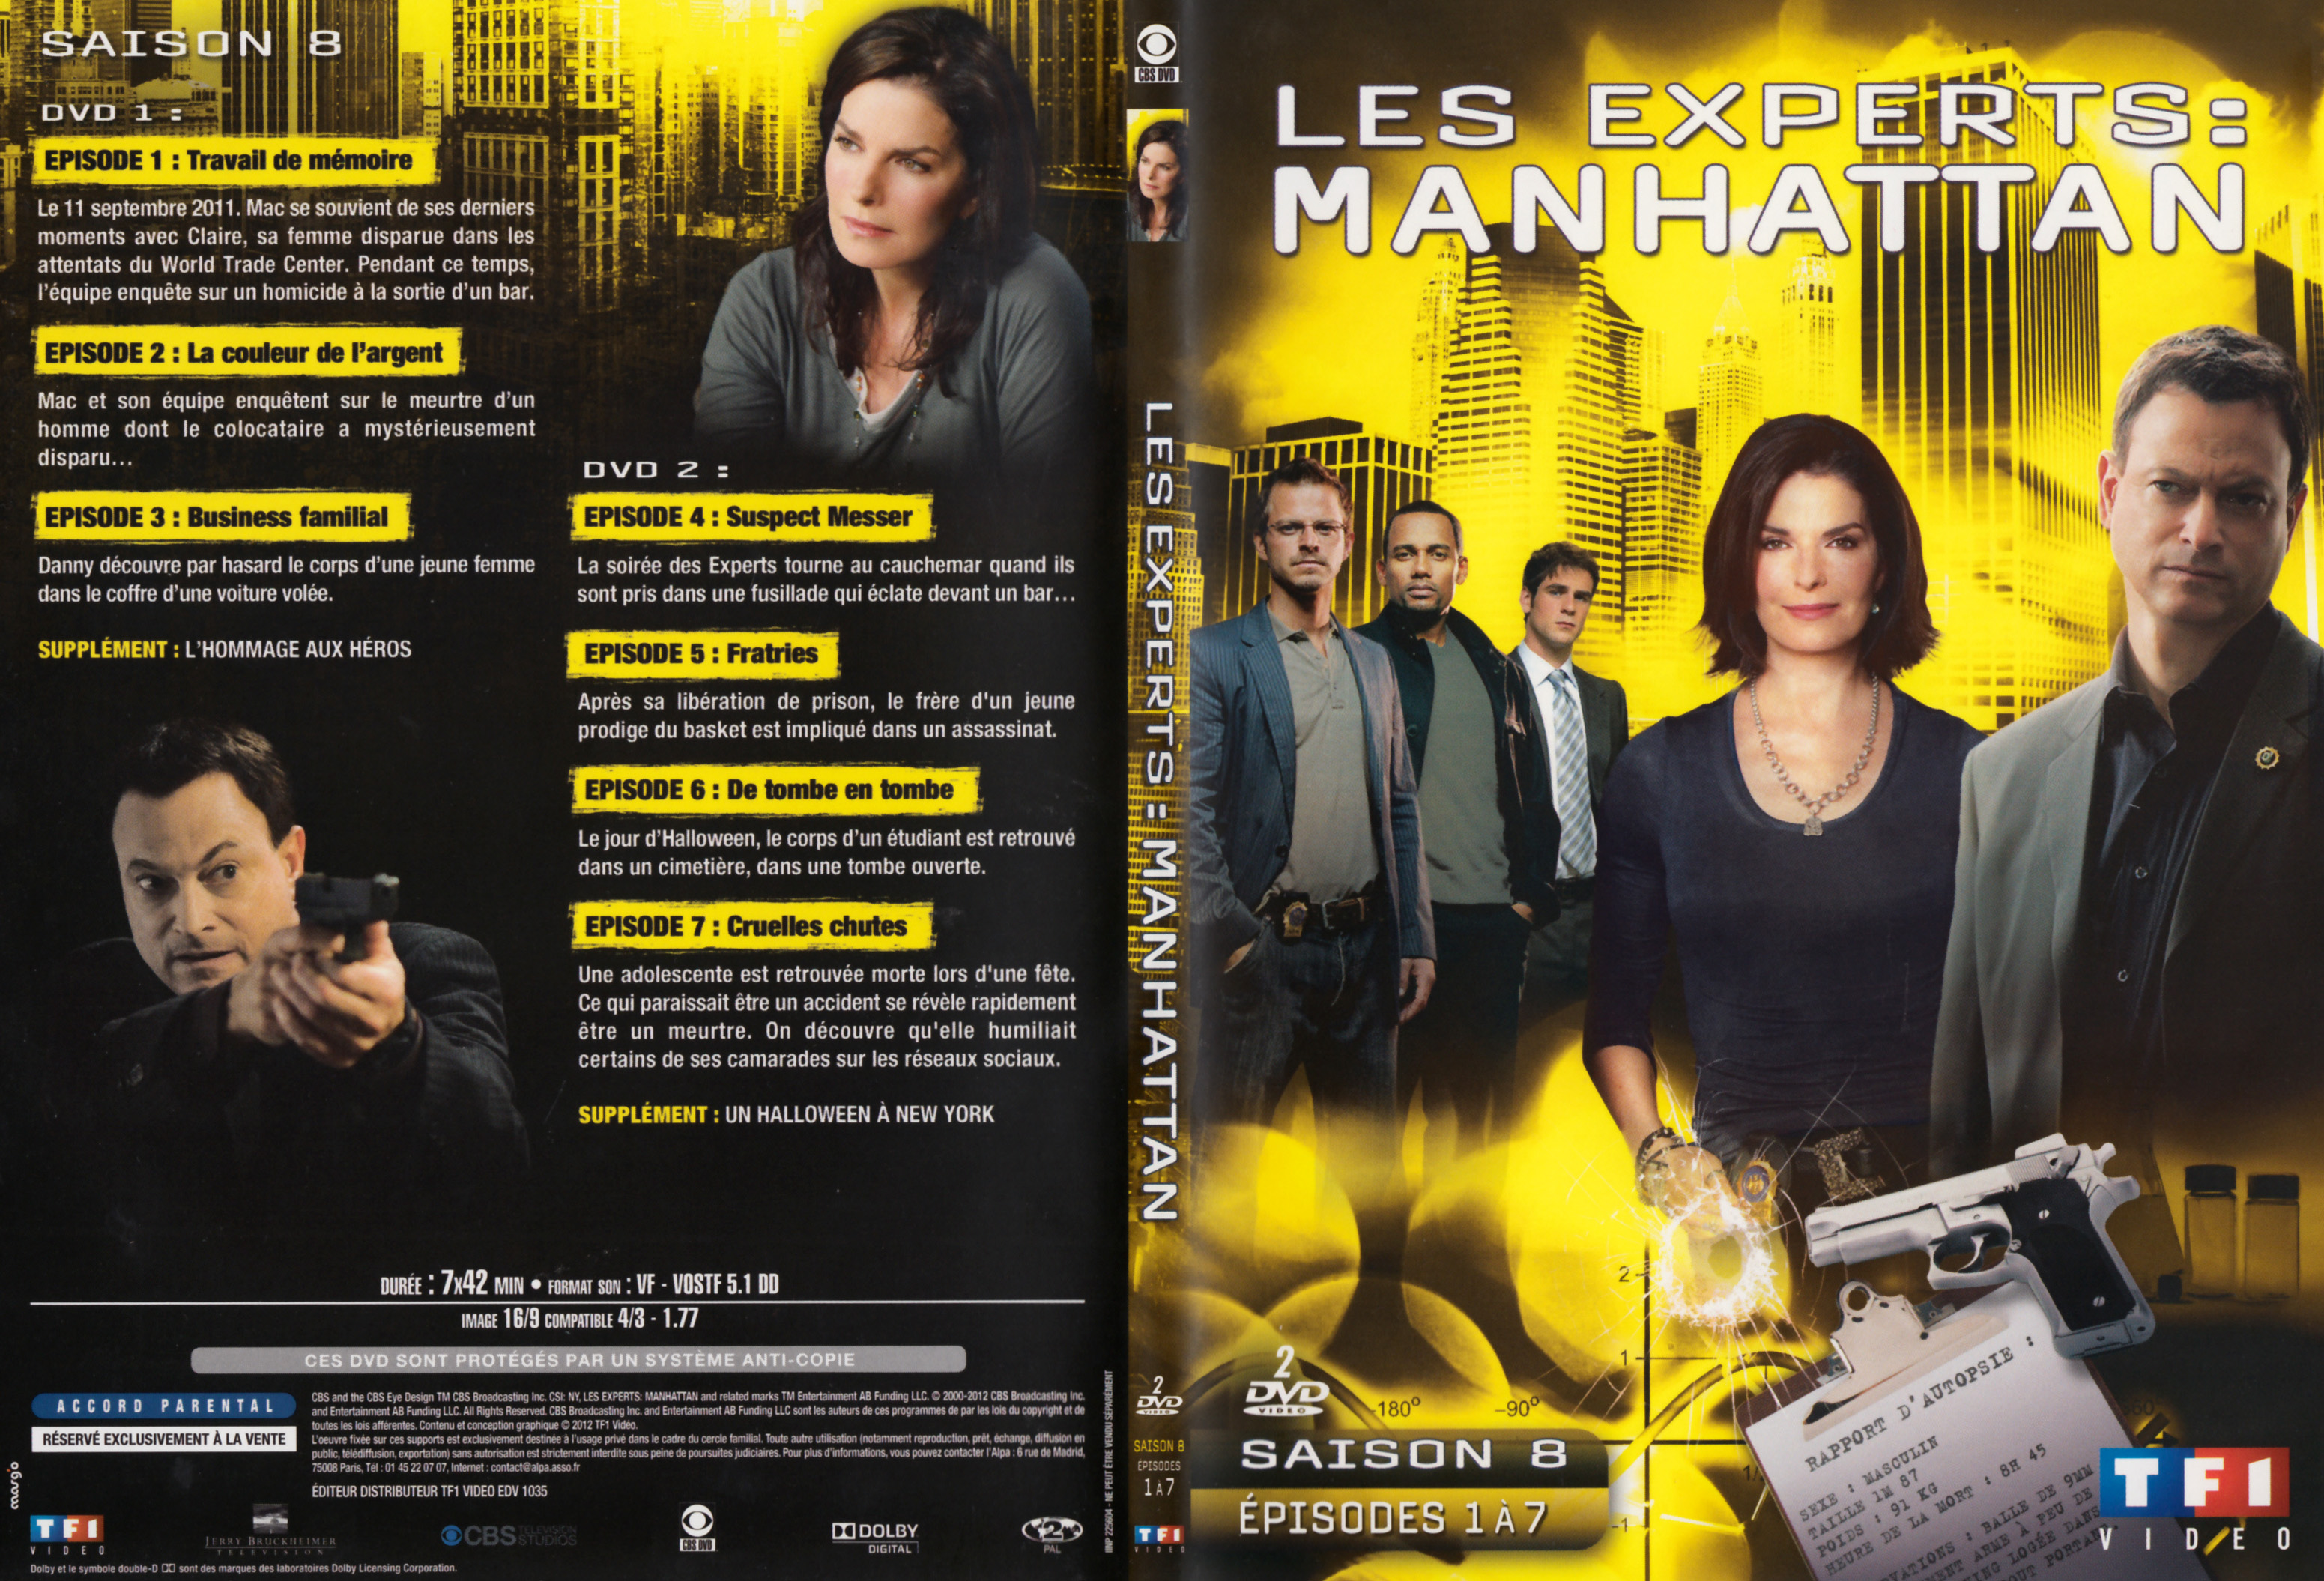 Jaquette DVD Les Experts Manhattan Saison 8 DVD 1